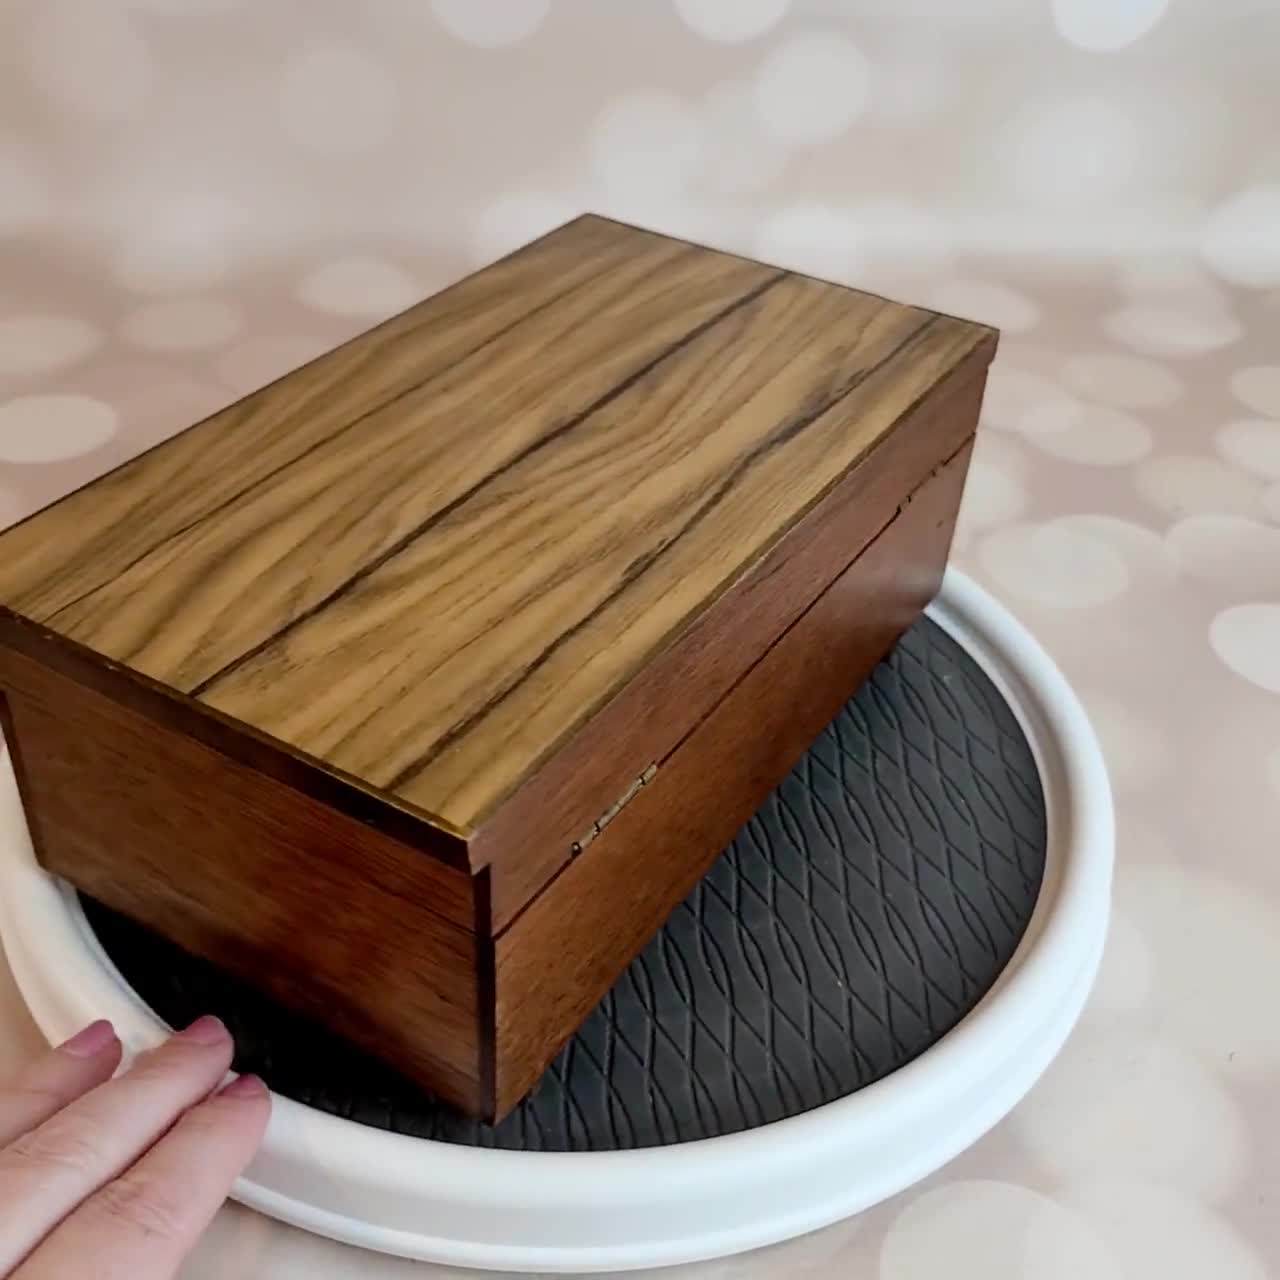 GG Caja de madera con tapa con bisagras para decoración del hogar, 10  pulgadas de largo x 10 pulgadas de ancho x 5 pulgadas de alto, marrón